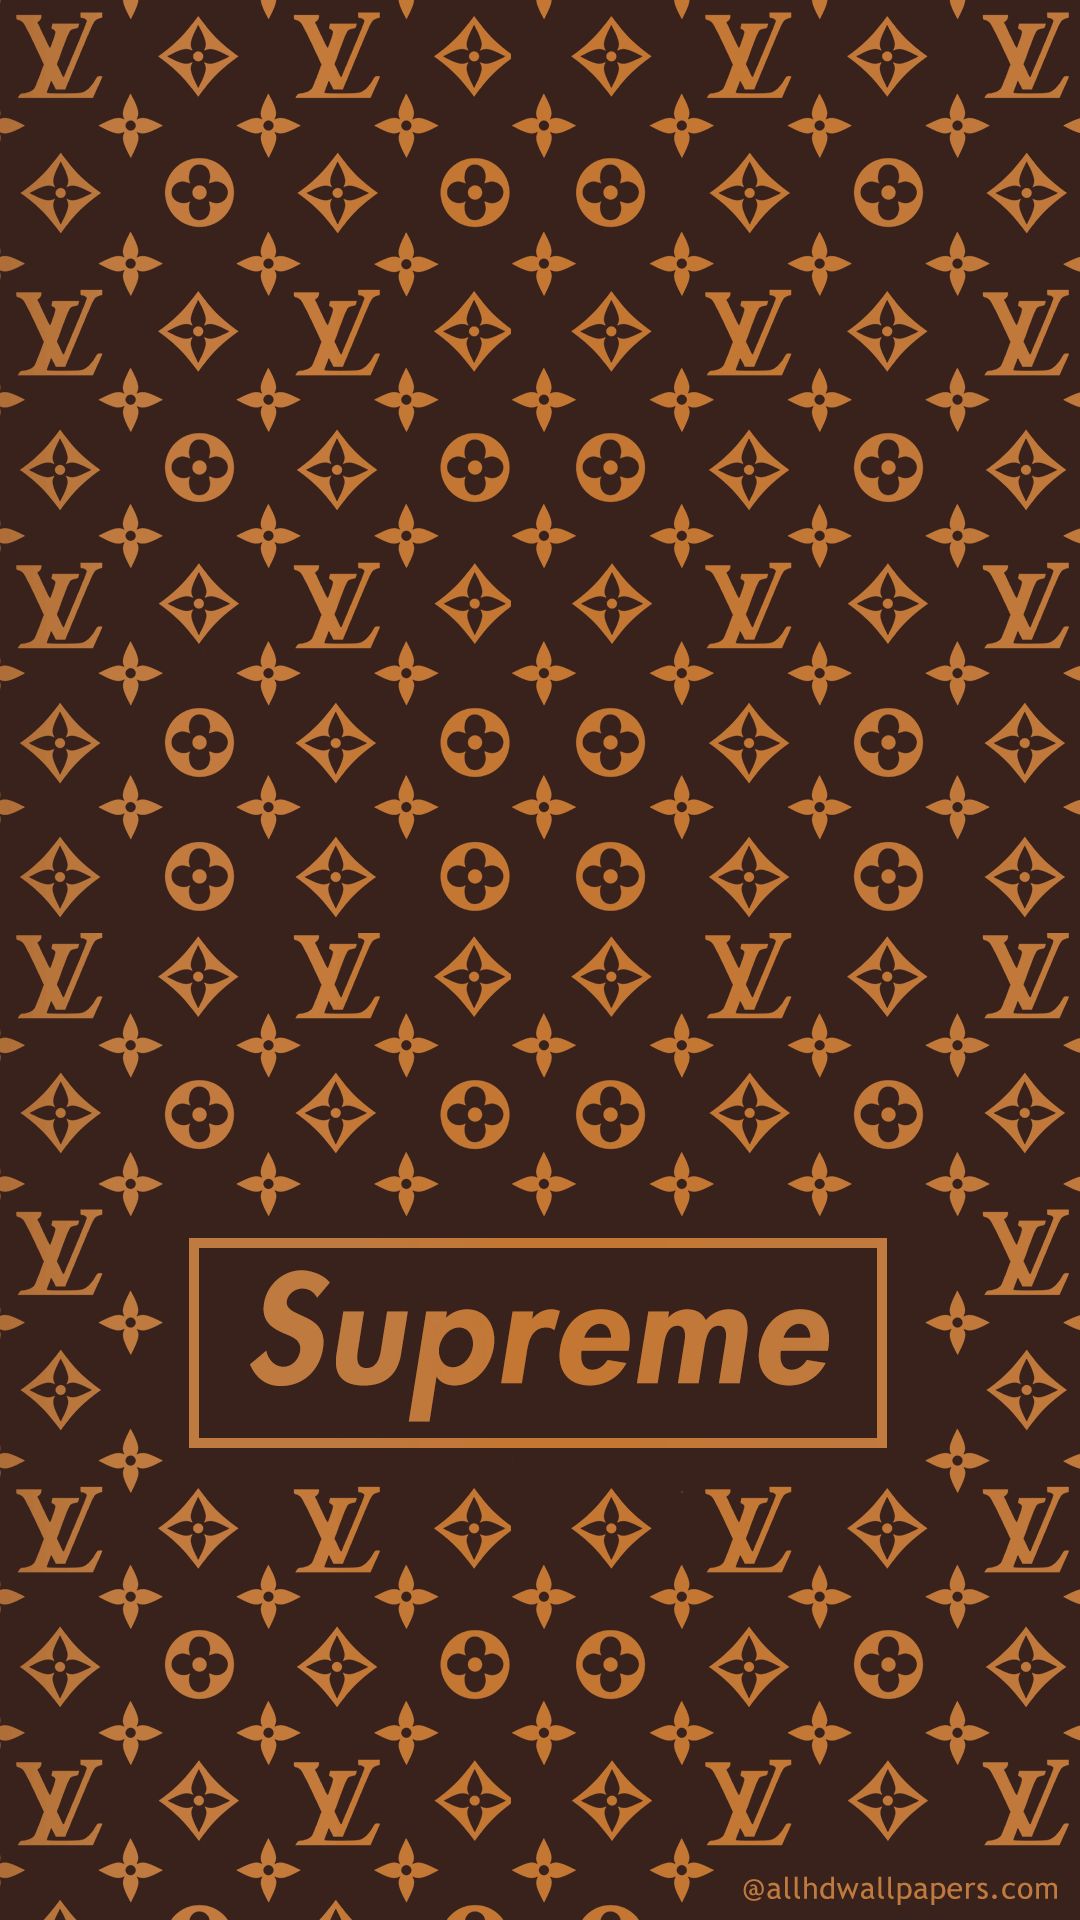 Supreme X ルイ ヴィトン ブランドのスマホ壁紙 Iphone Wallpapers